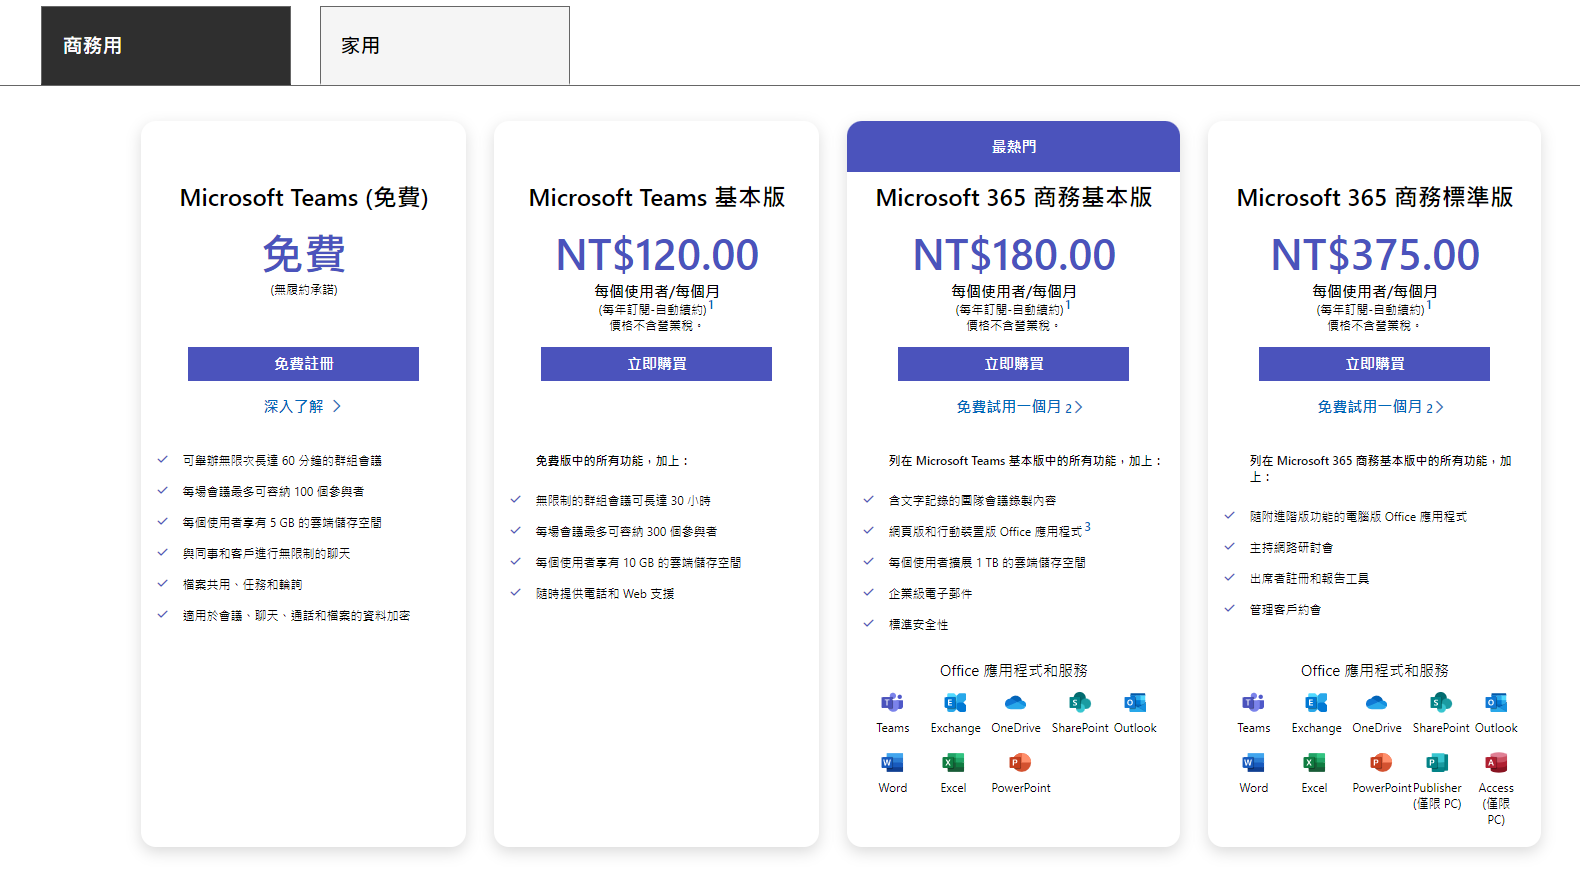 Microsoft Teams 商務用方案價格